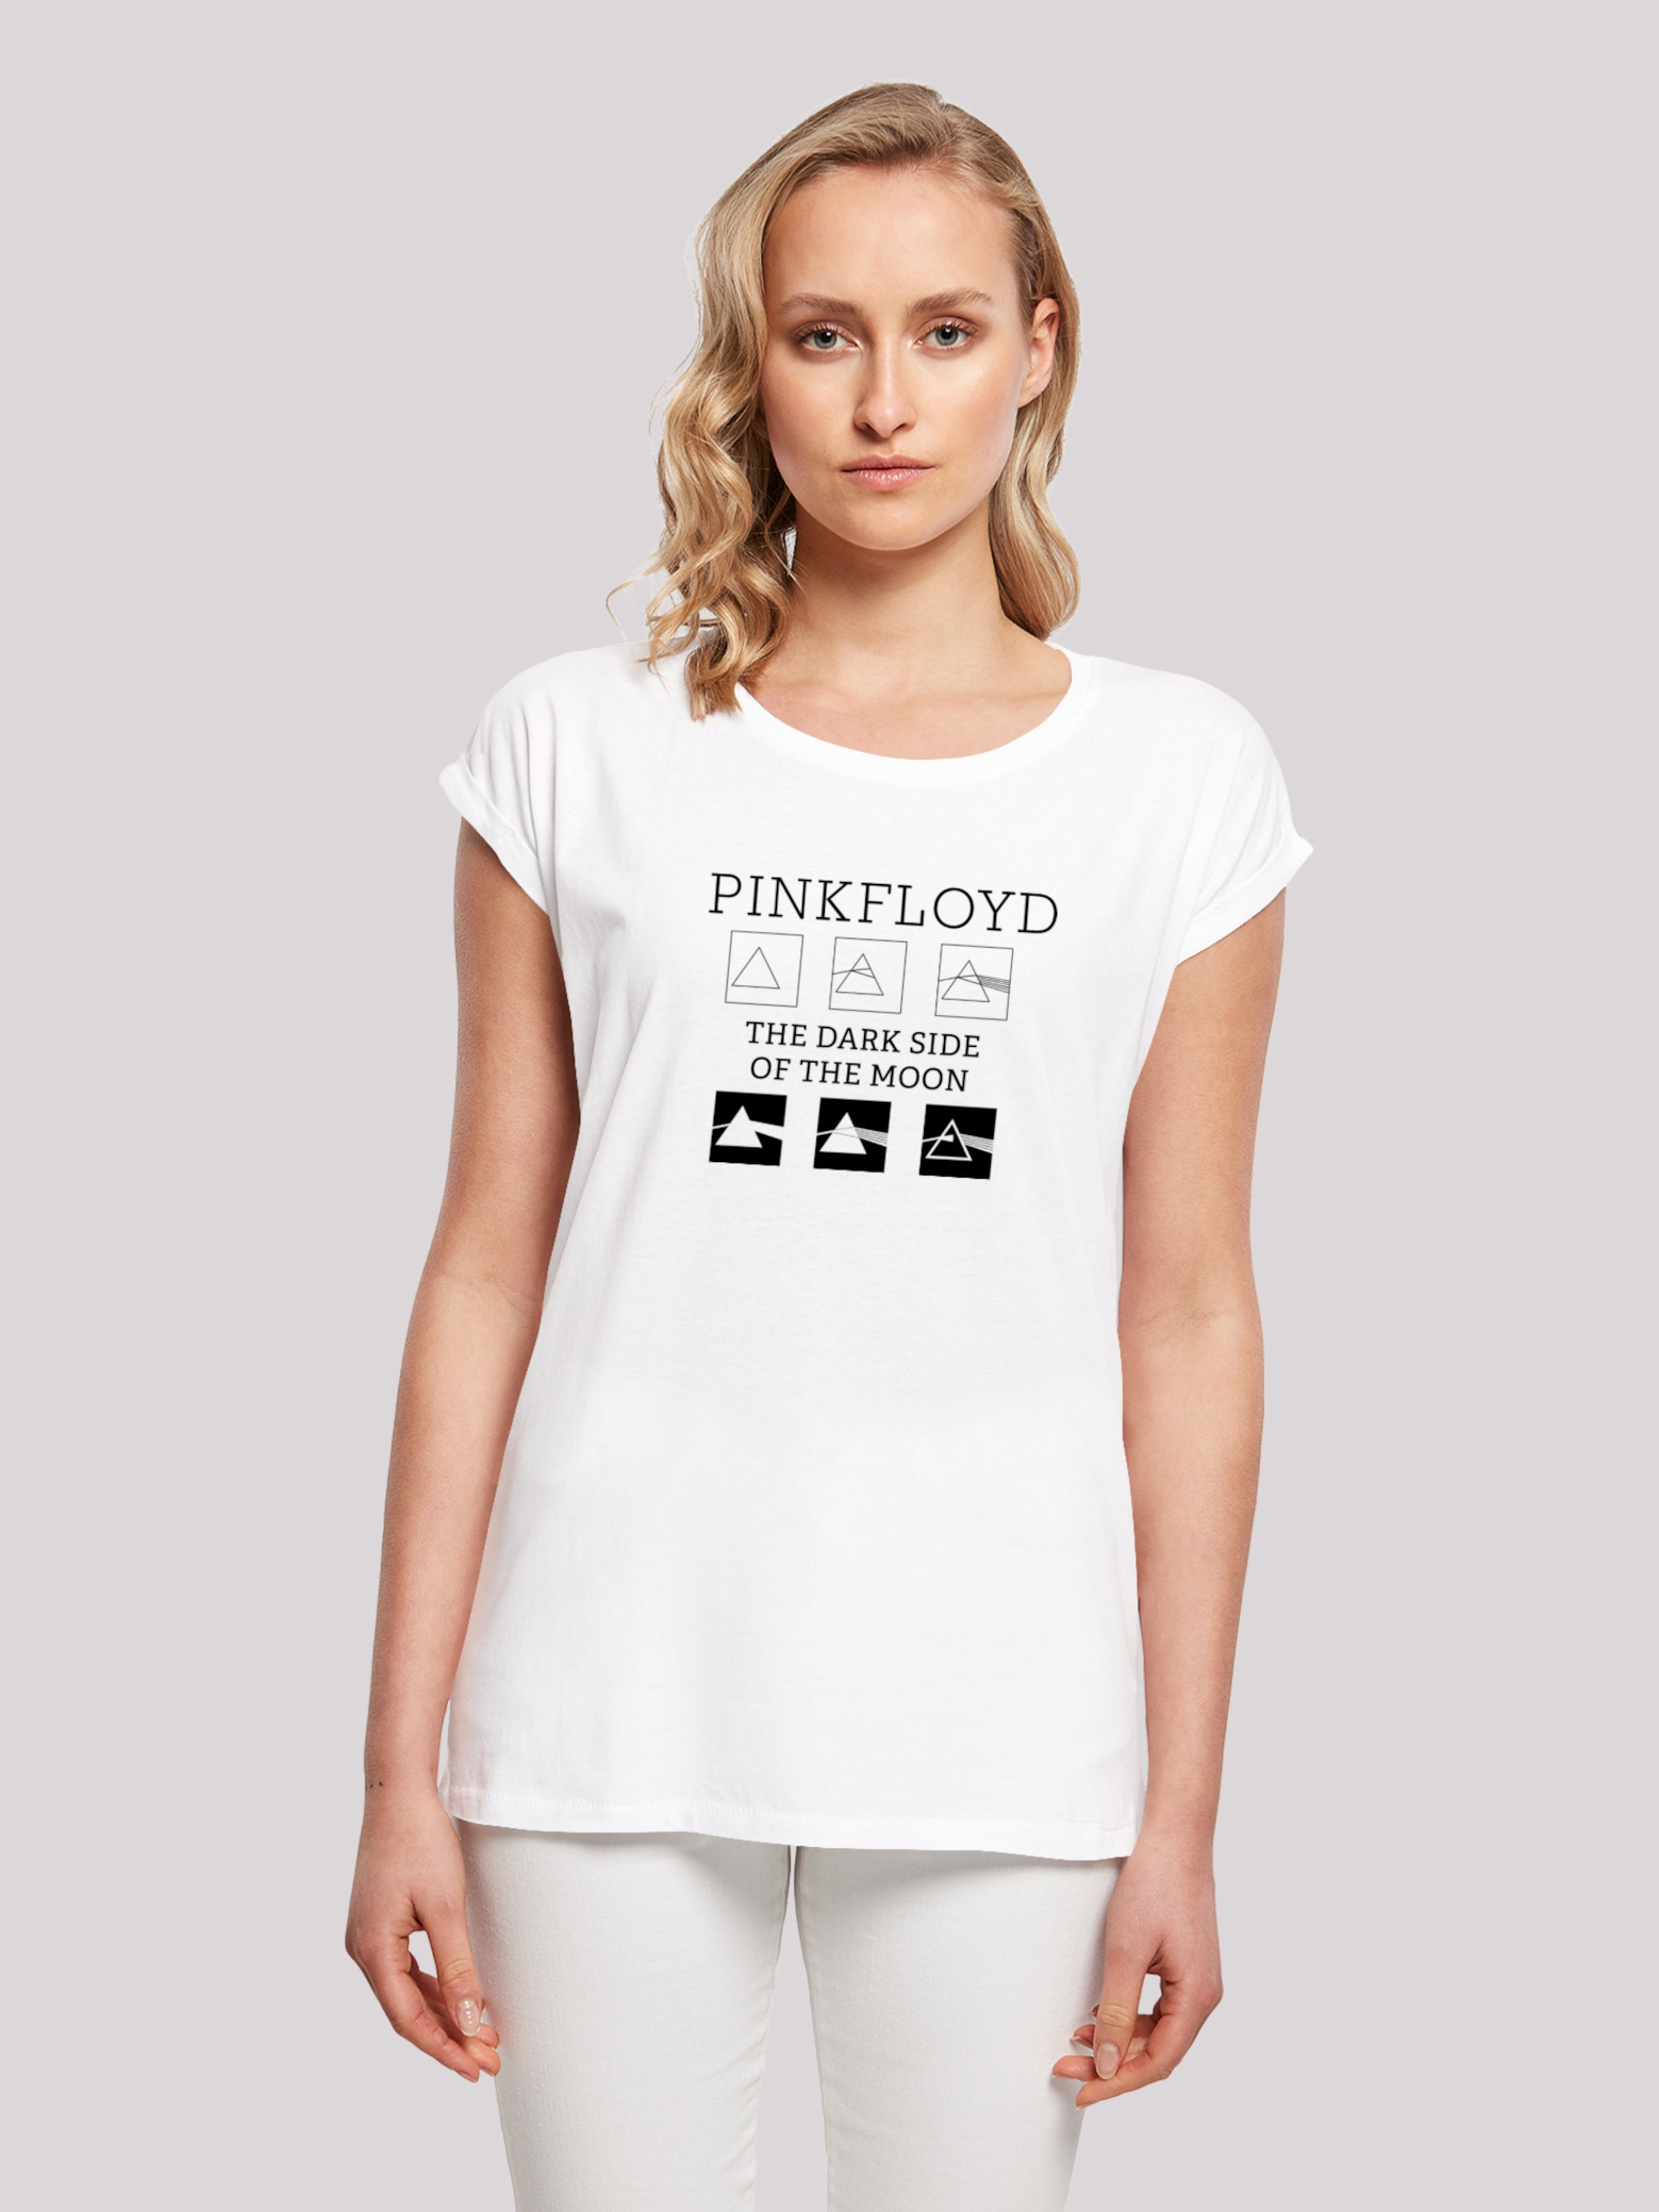 Frauen Shirts & Tops F4NT4STIC T-shirt in Weiß - HL84684